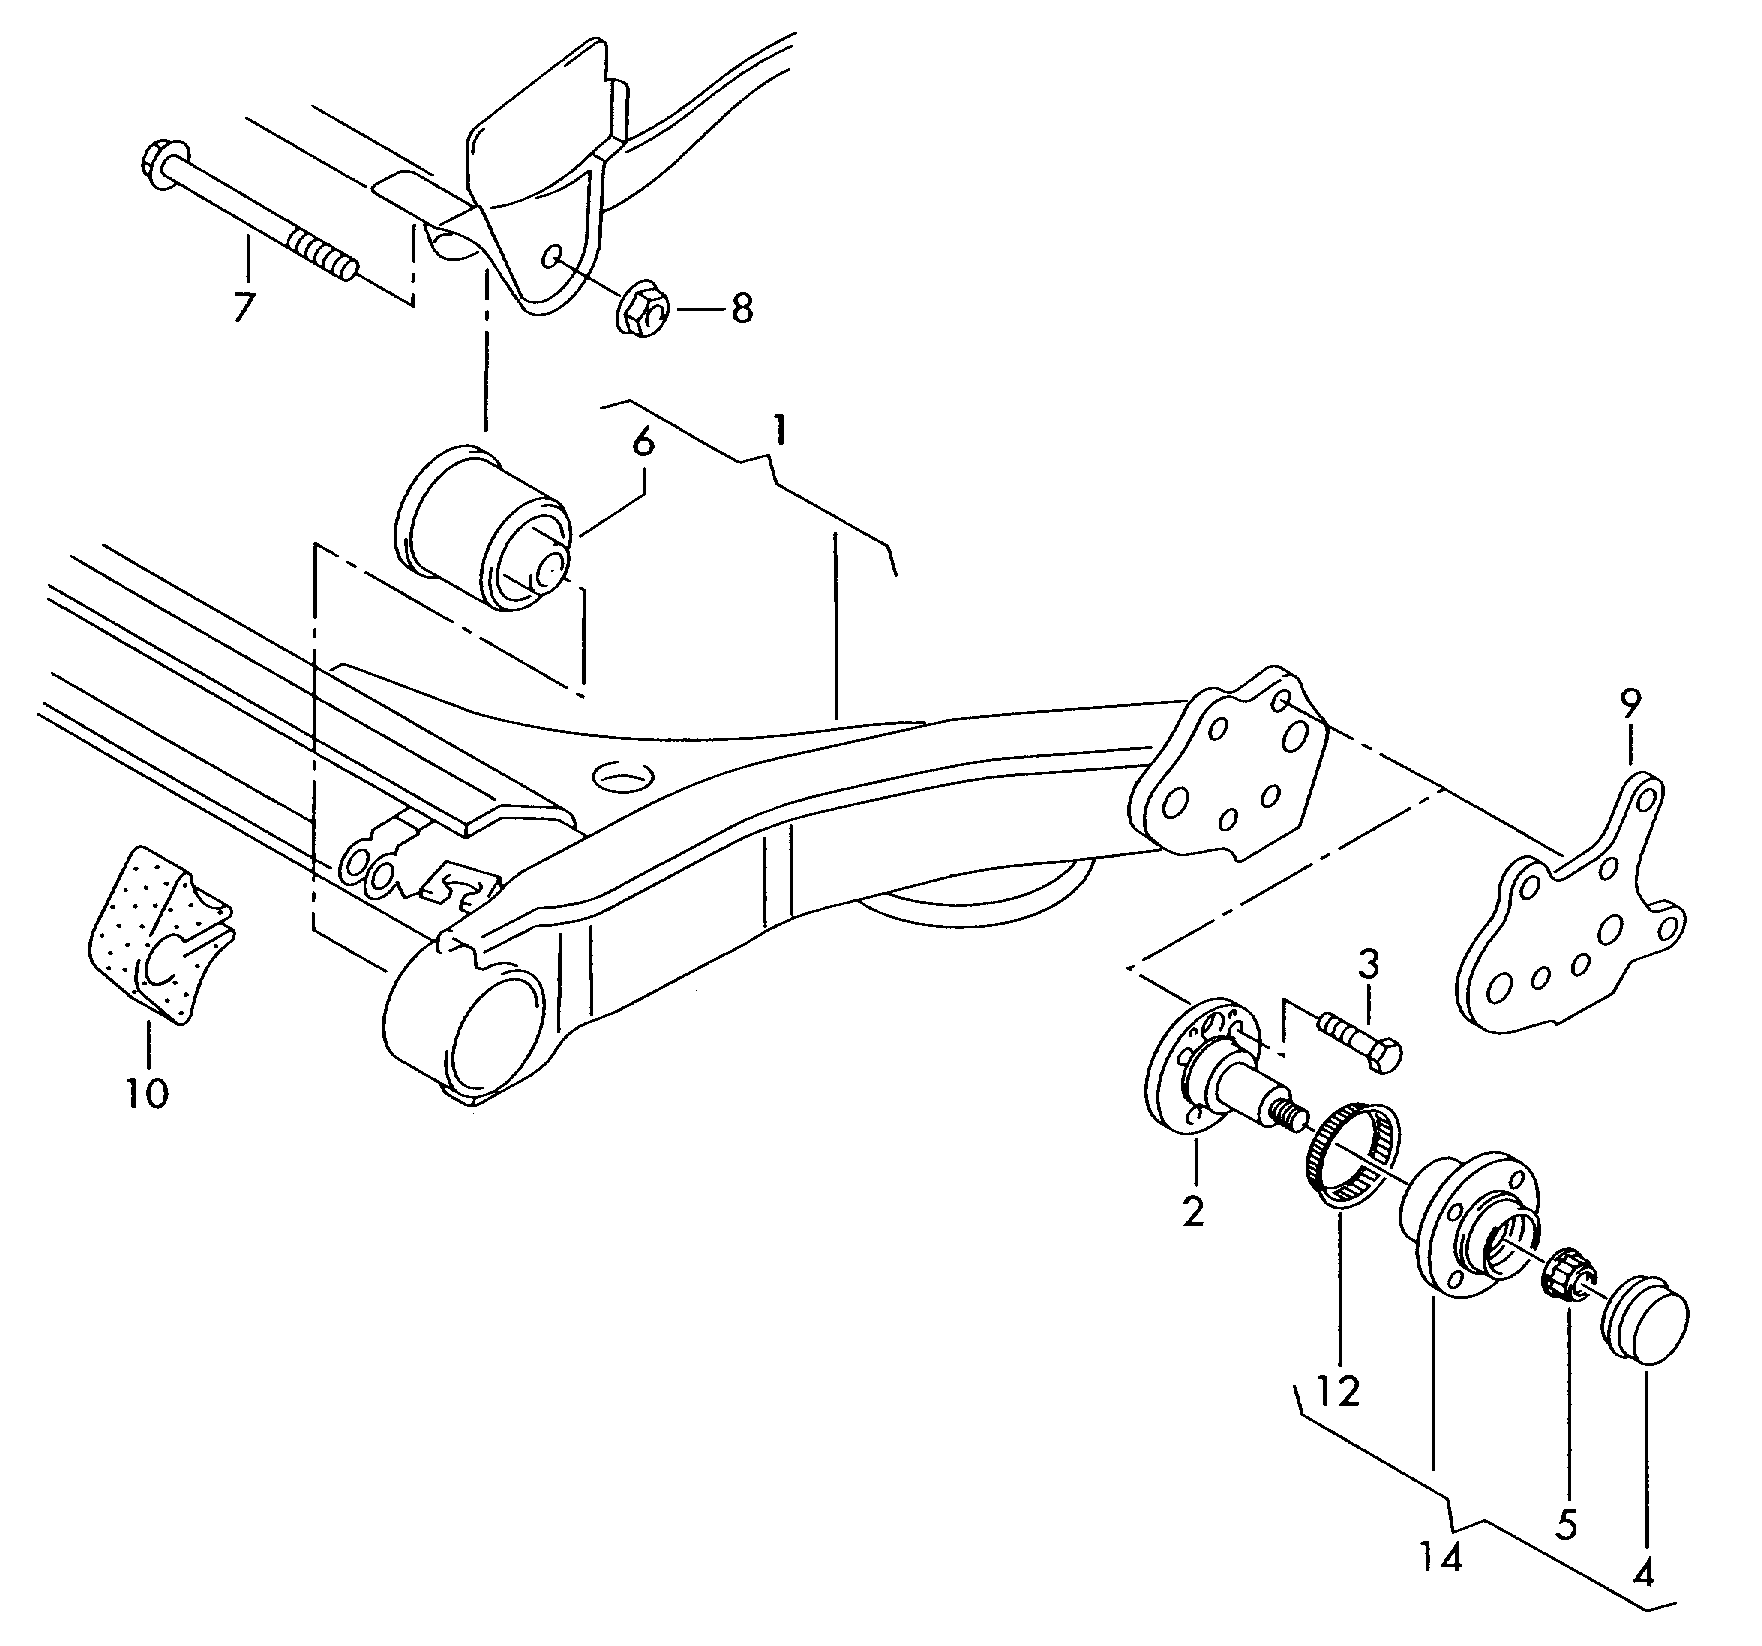 rear axle beam with attachment
parts - Lupo / Lupo 3L TDI(LU)  